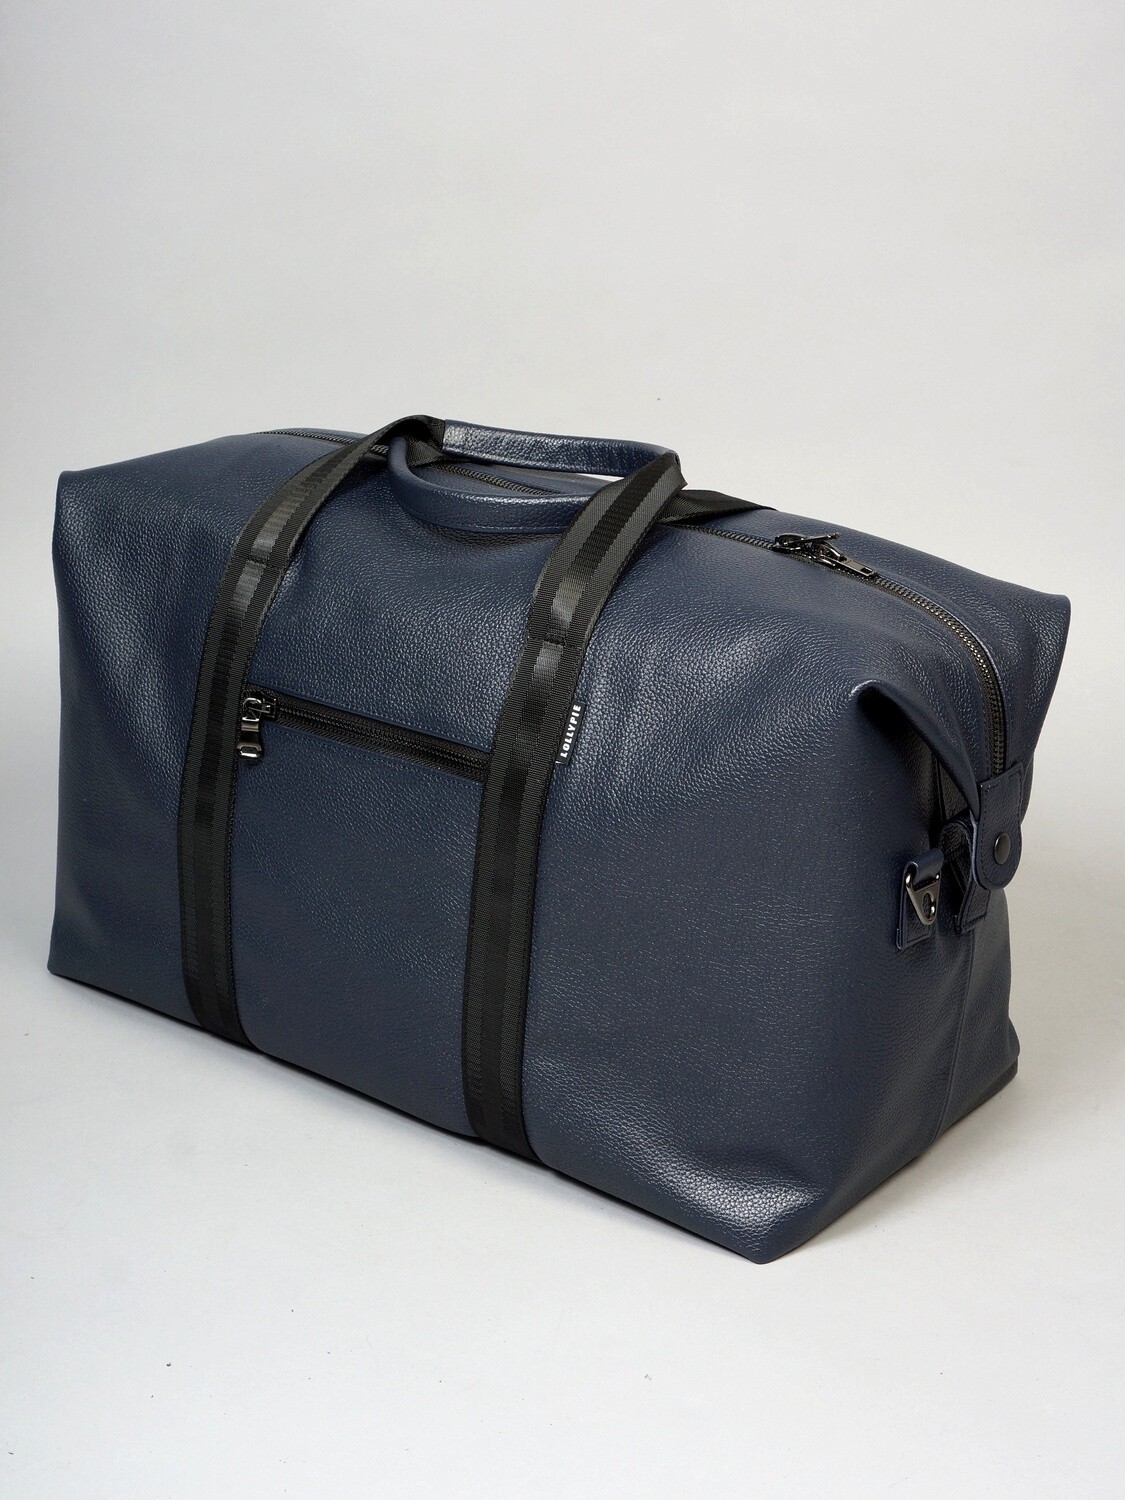 Sports bag genuine blue leather